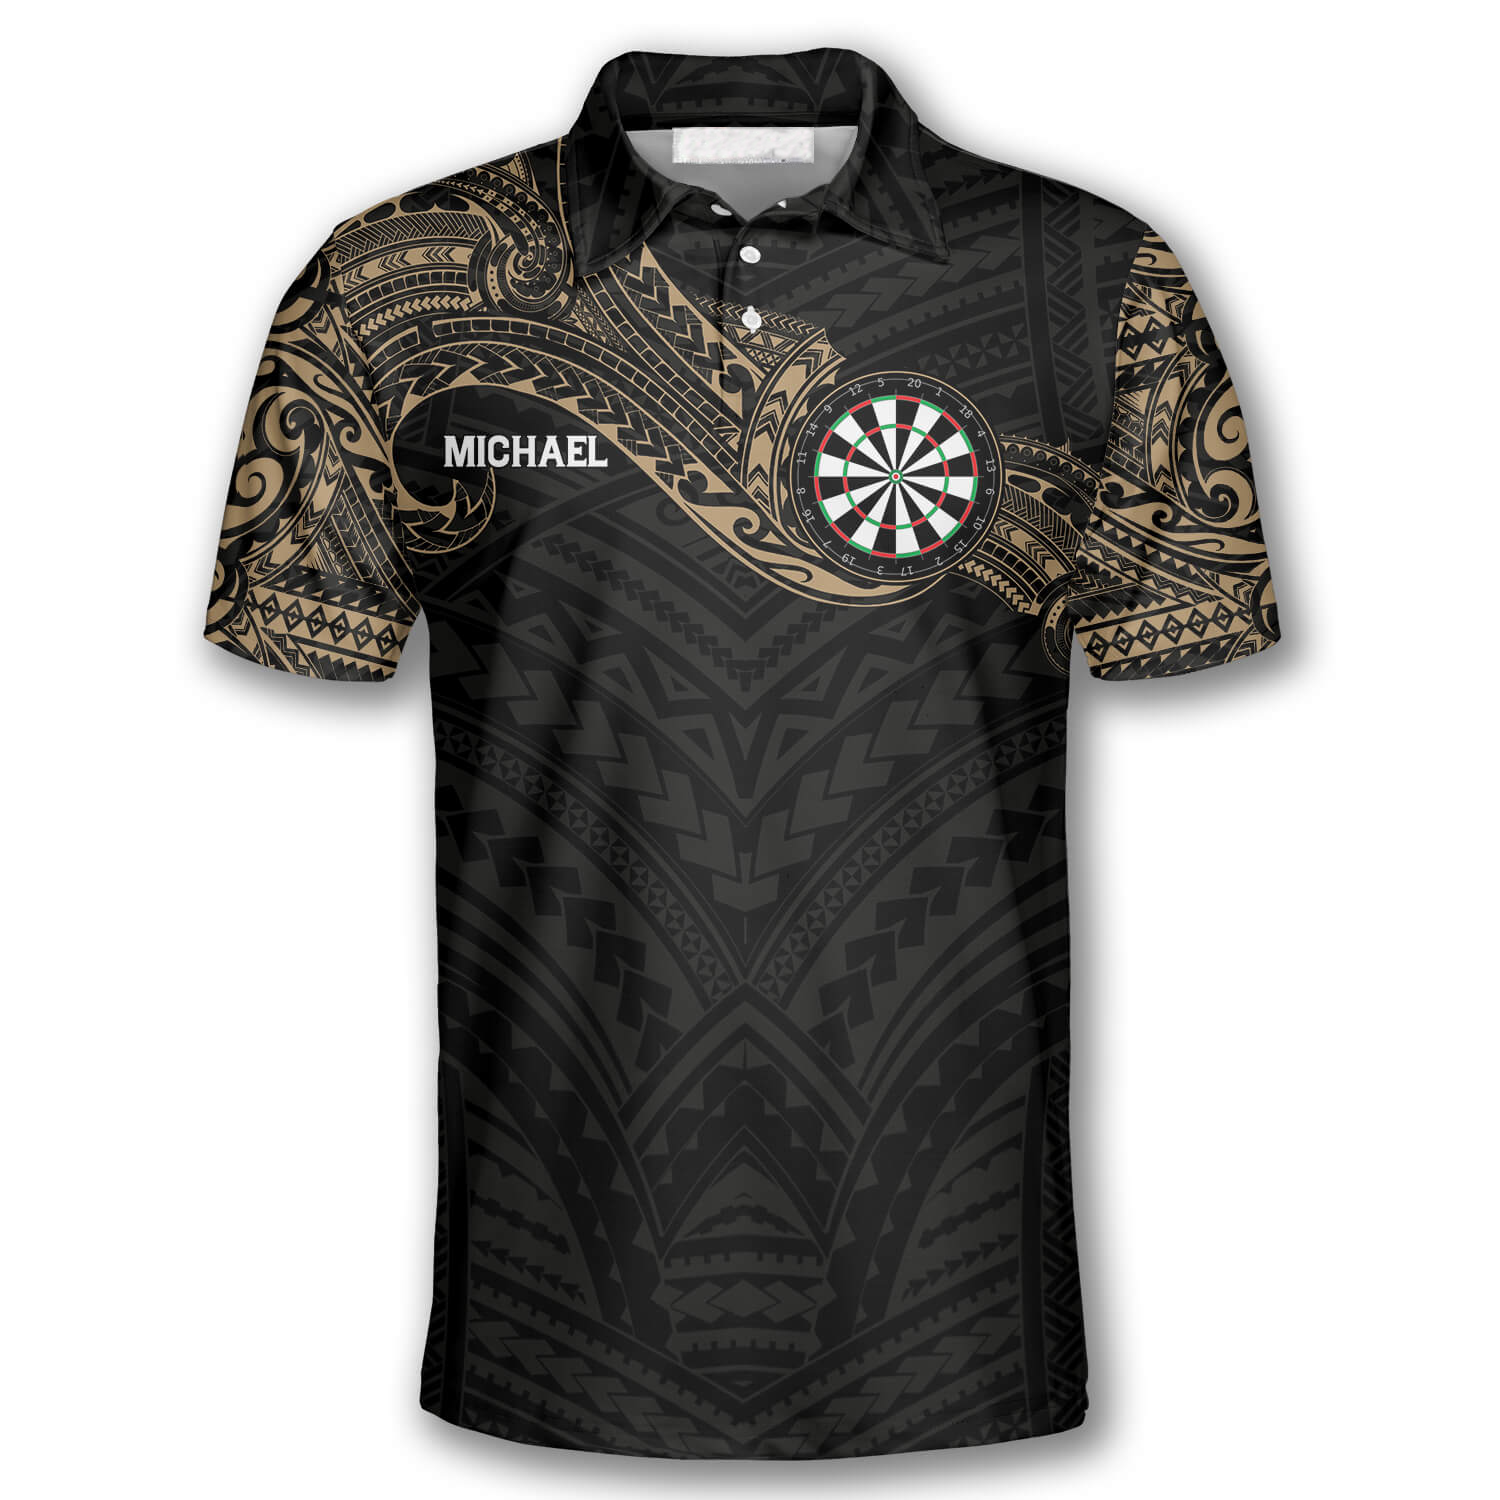 Classy Dark Tribal Tattoo Custom Darts Shirts for Men/ Dart Team Uniform